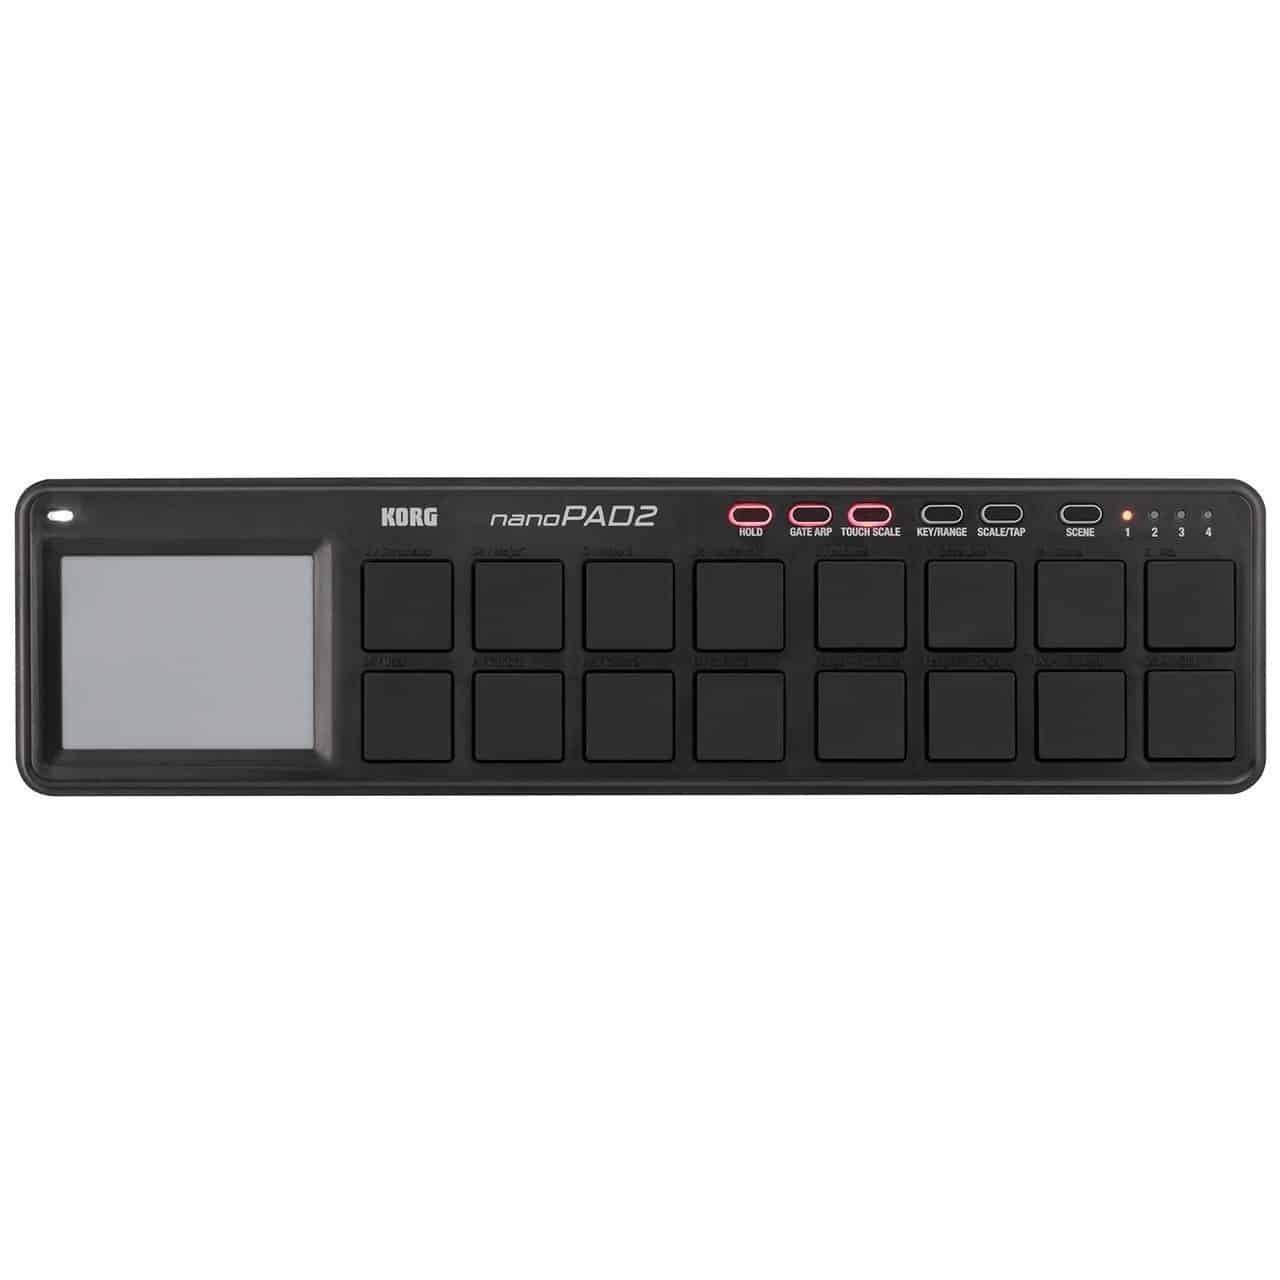 Korg - Korg nanoPAD 2 Slim-Line USB Pad MIDI Controller - BLACK - Live & Recording - Midi Controllers by Korg at Muso's Stuff